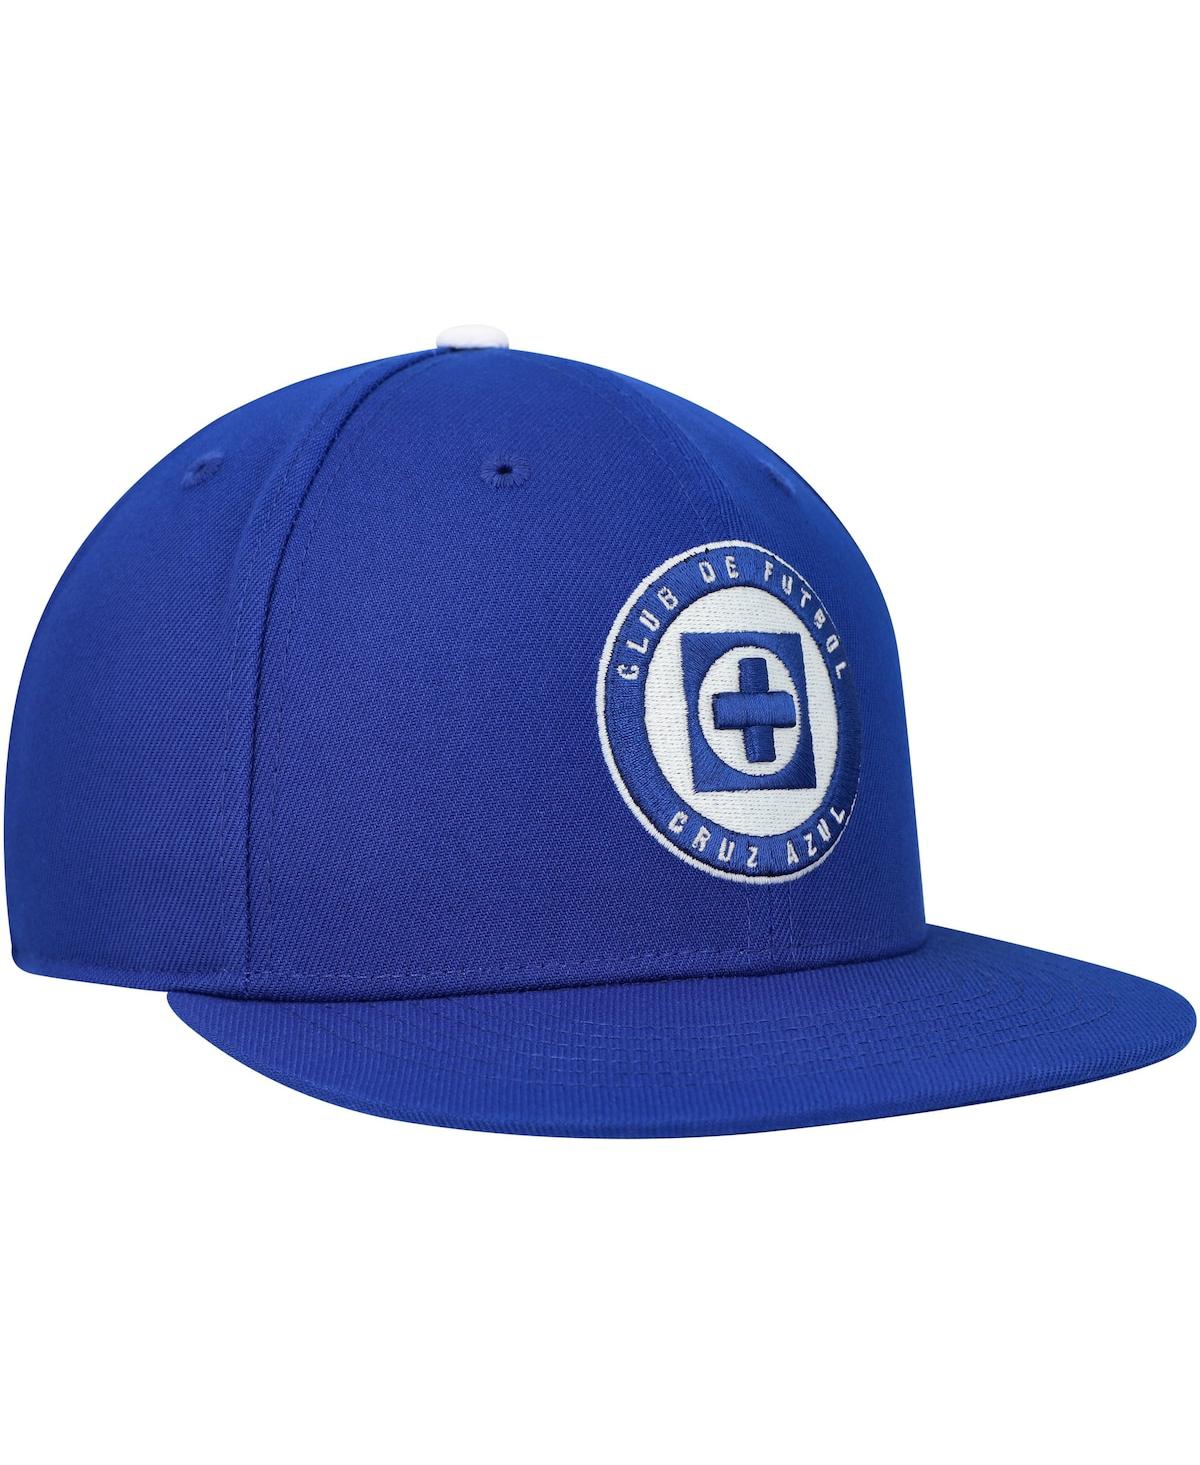 Shop Fan Ink Men's Royal Cruz Azul America's Game Snapback Hat